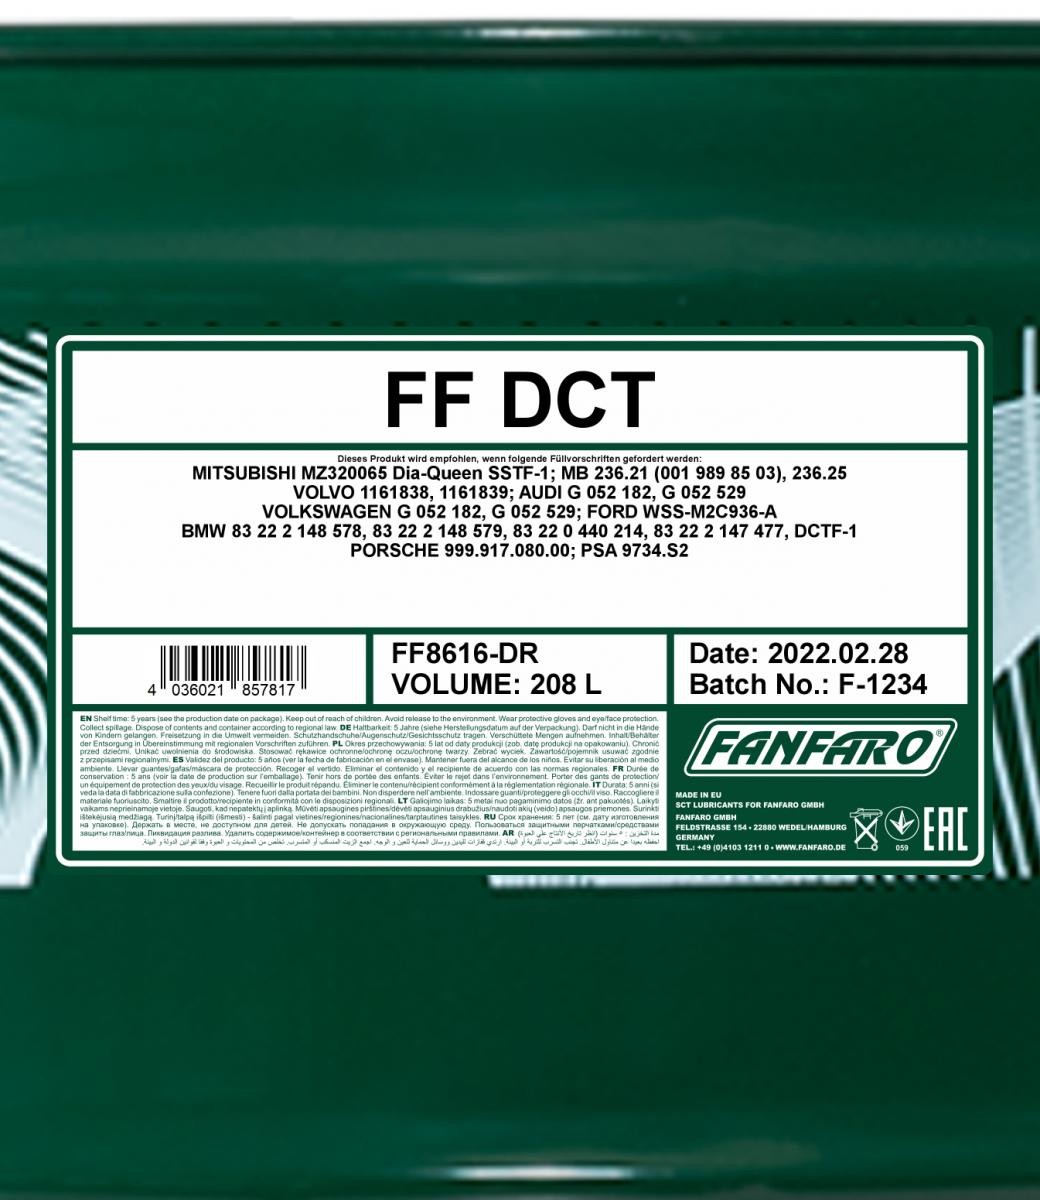 FANFARO Manual Transmission Oil FF8616-DR